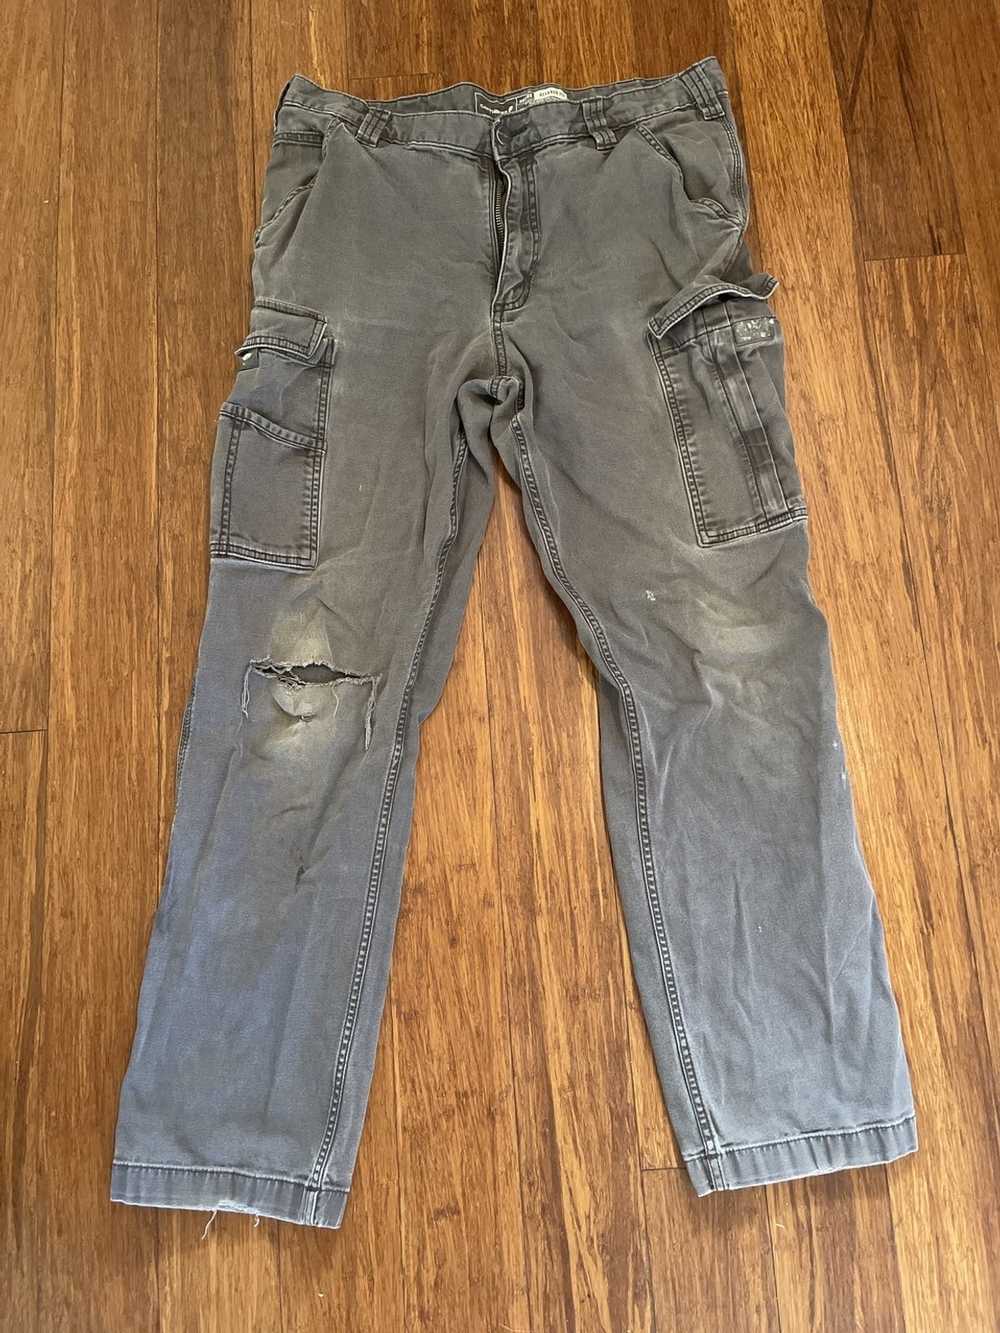 Carhartt Distressed Grey Carhartt Cargo Pants - image 1